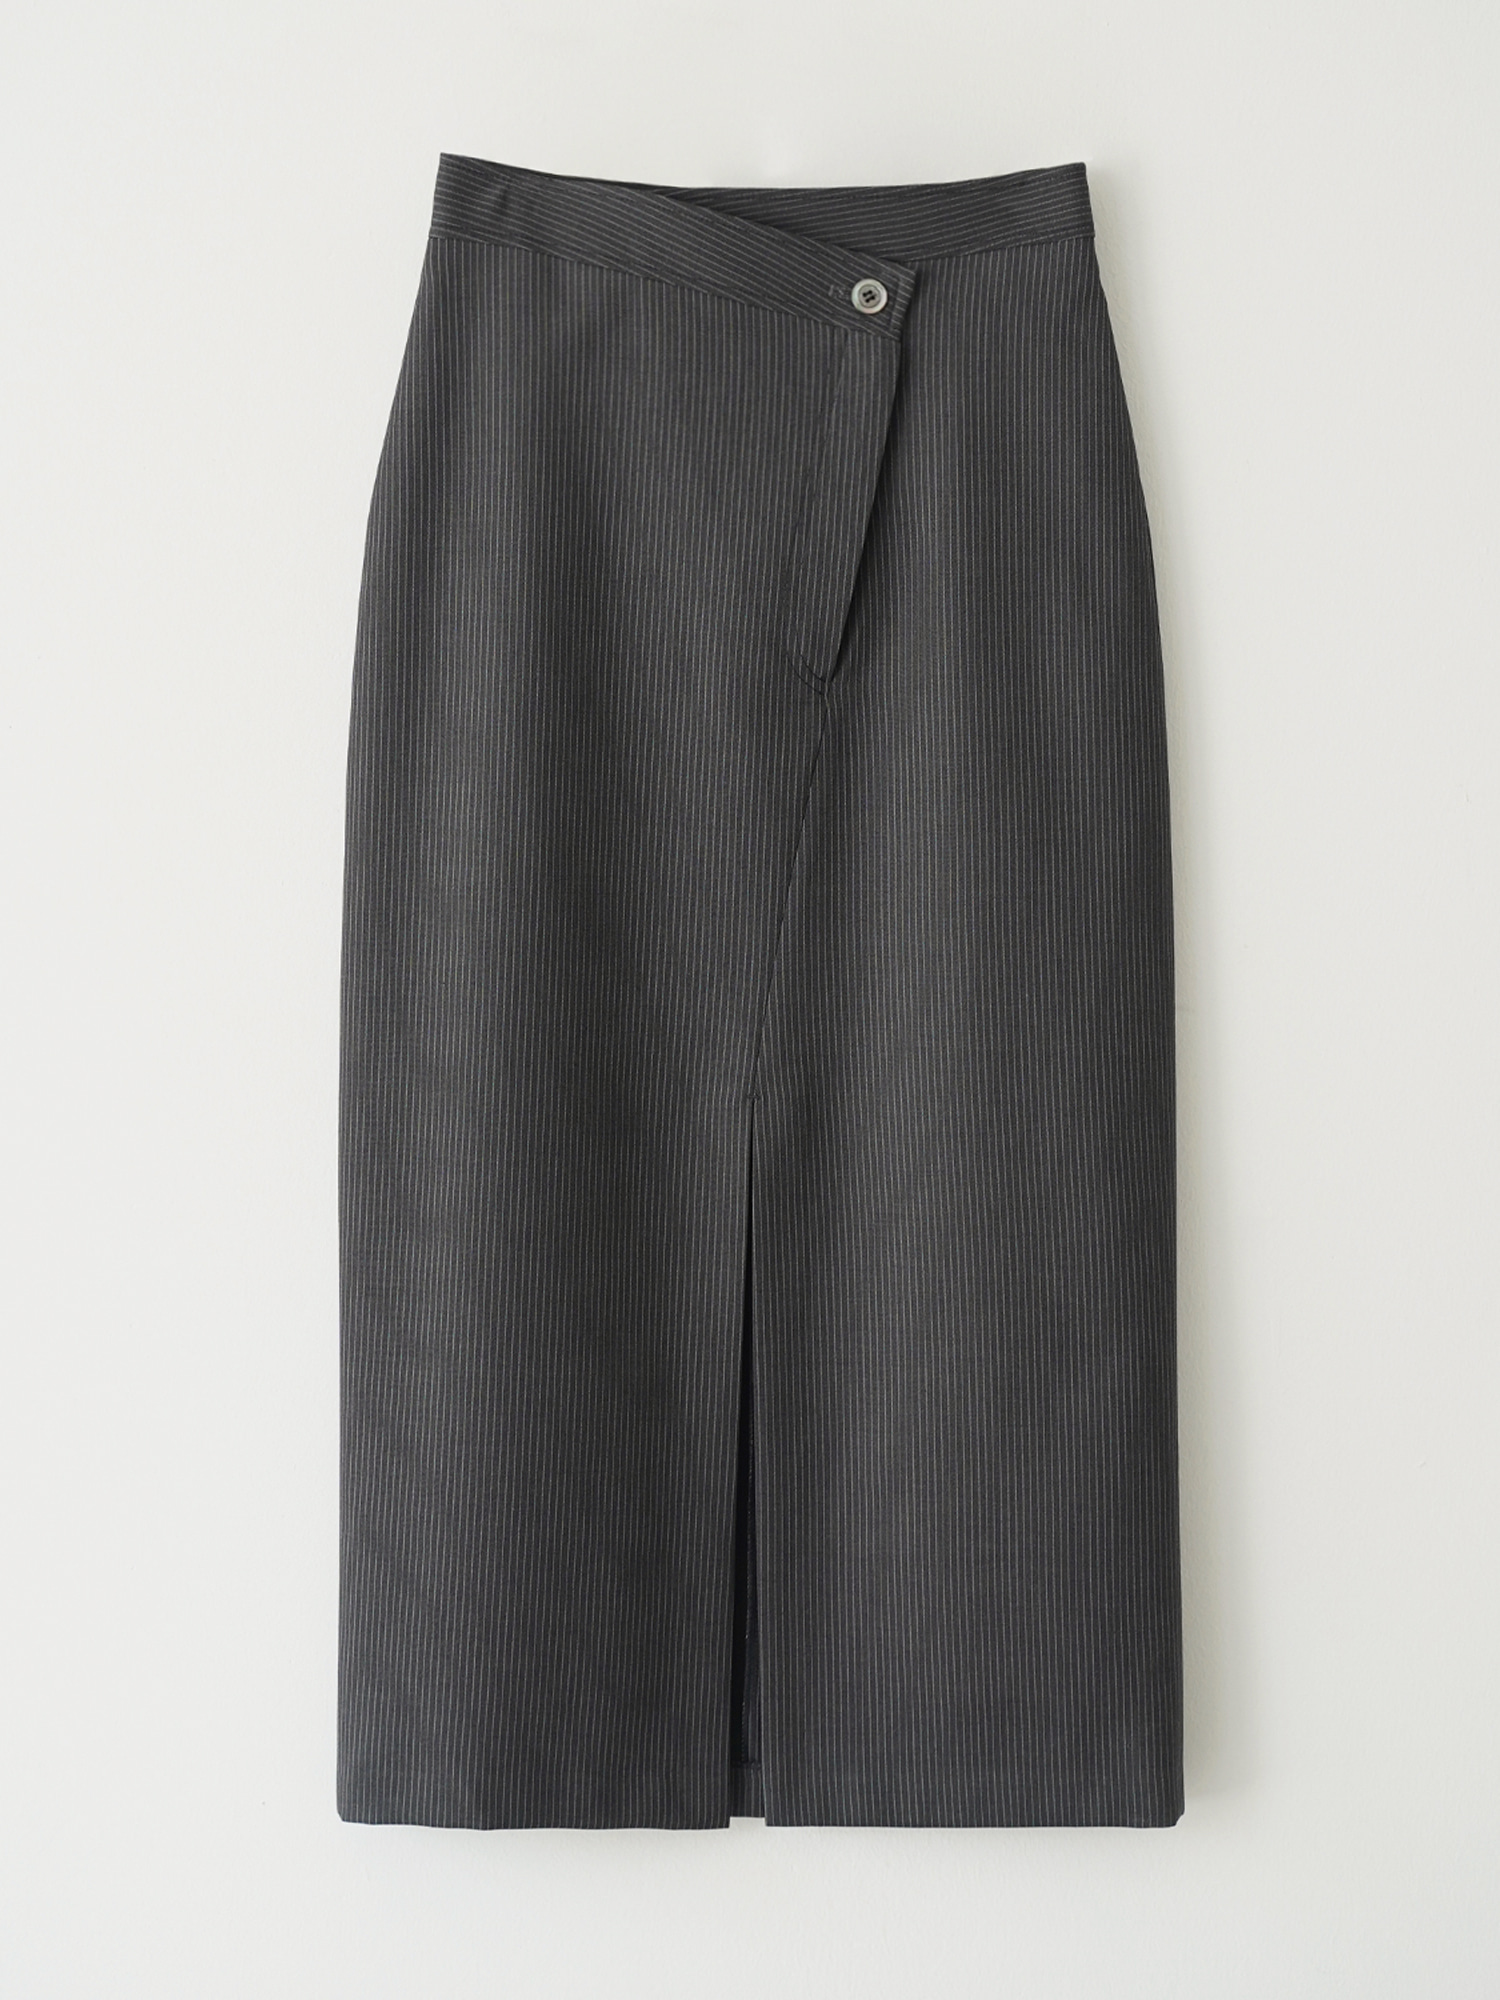 Stripe Unbalance Skirt  (Gray)